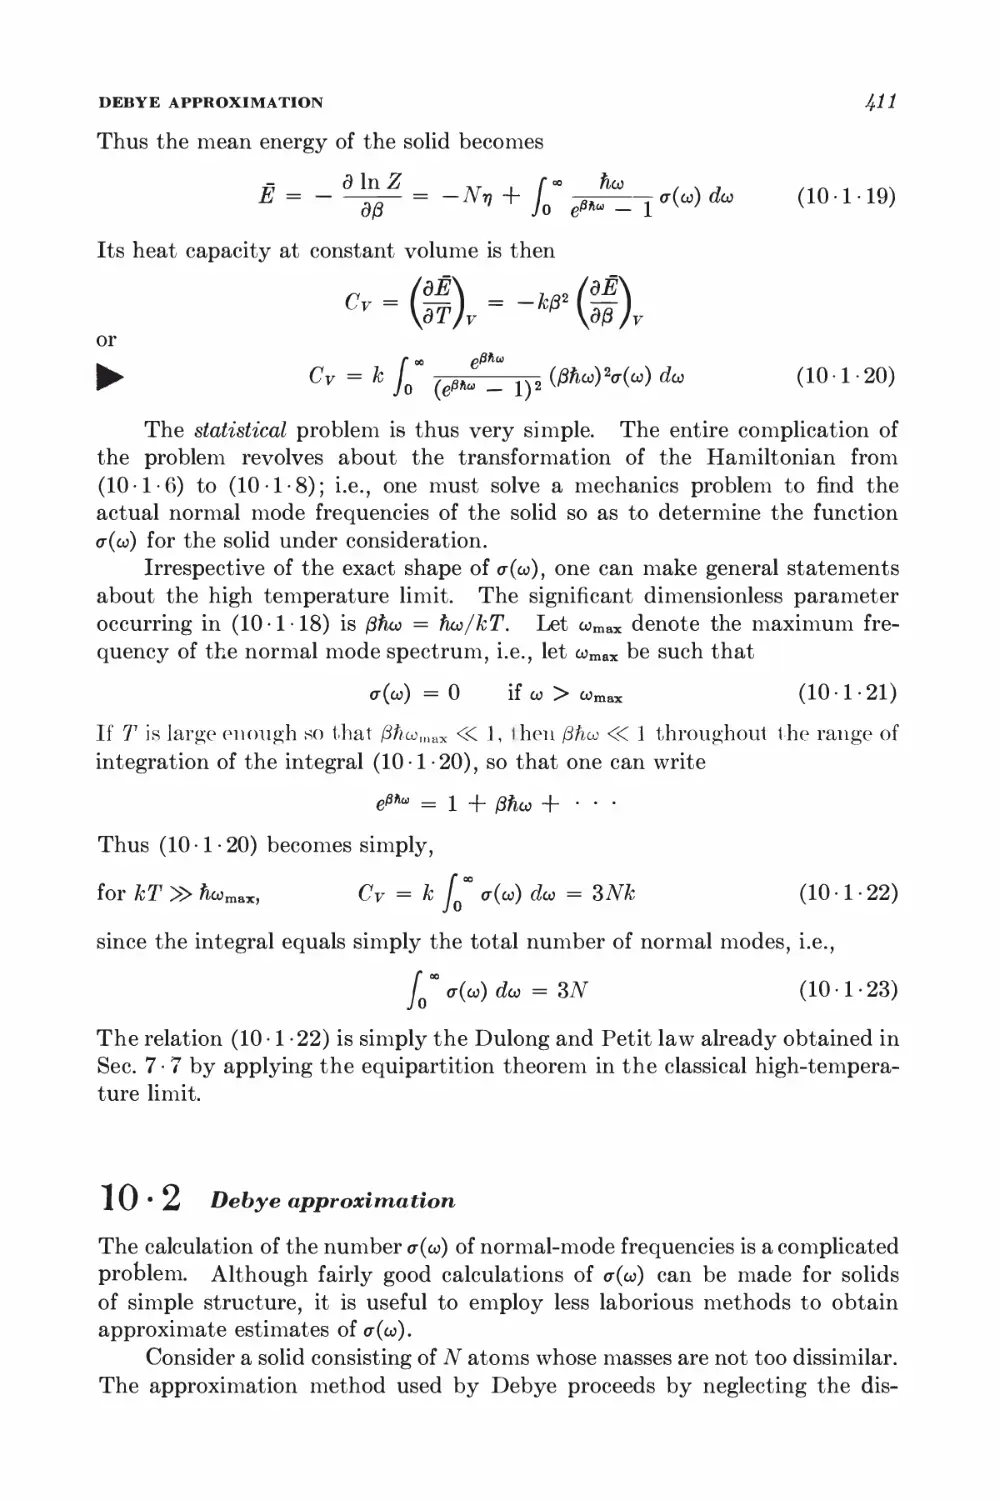 10.2 Debye approximation